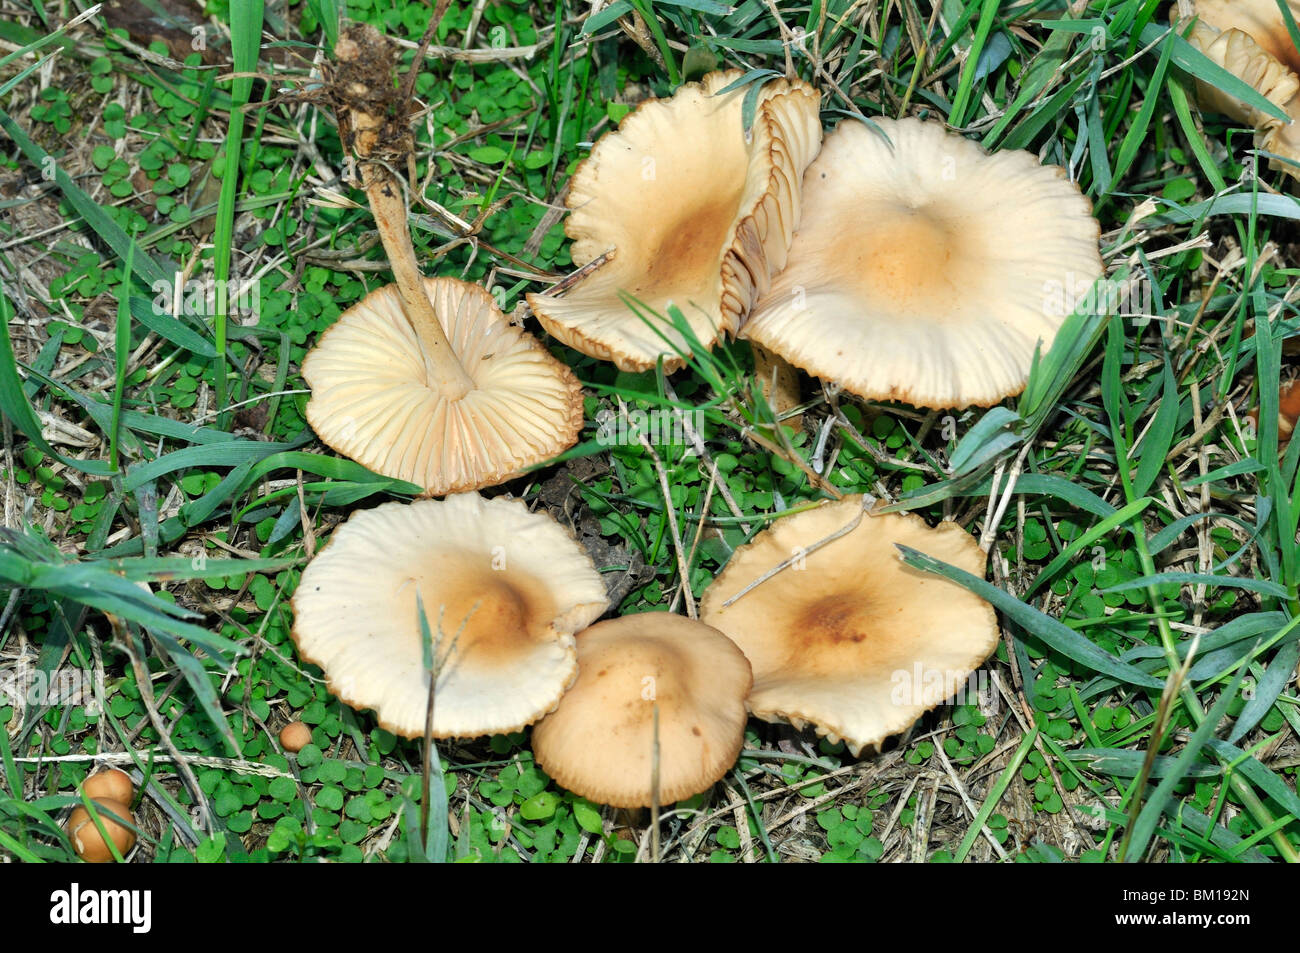 Marasmius oreades, scotch bonnet or fairy ring mushroom Stock Photo